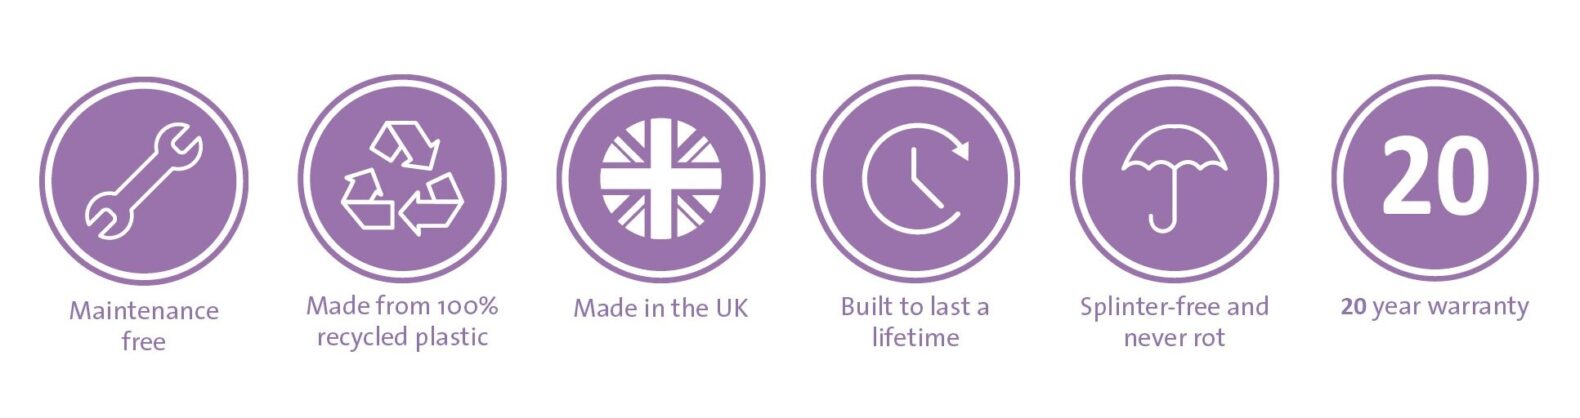 purple circle icons